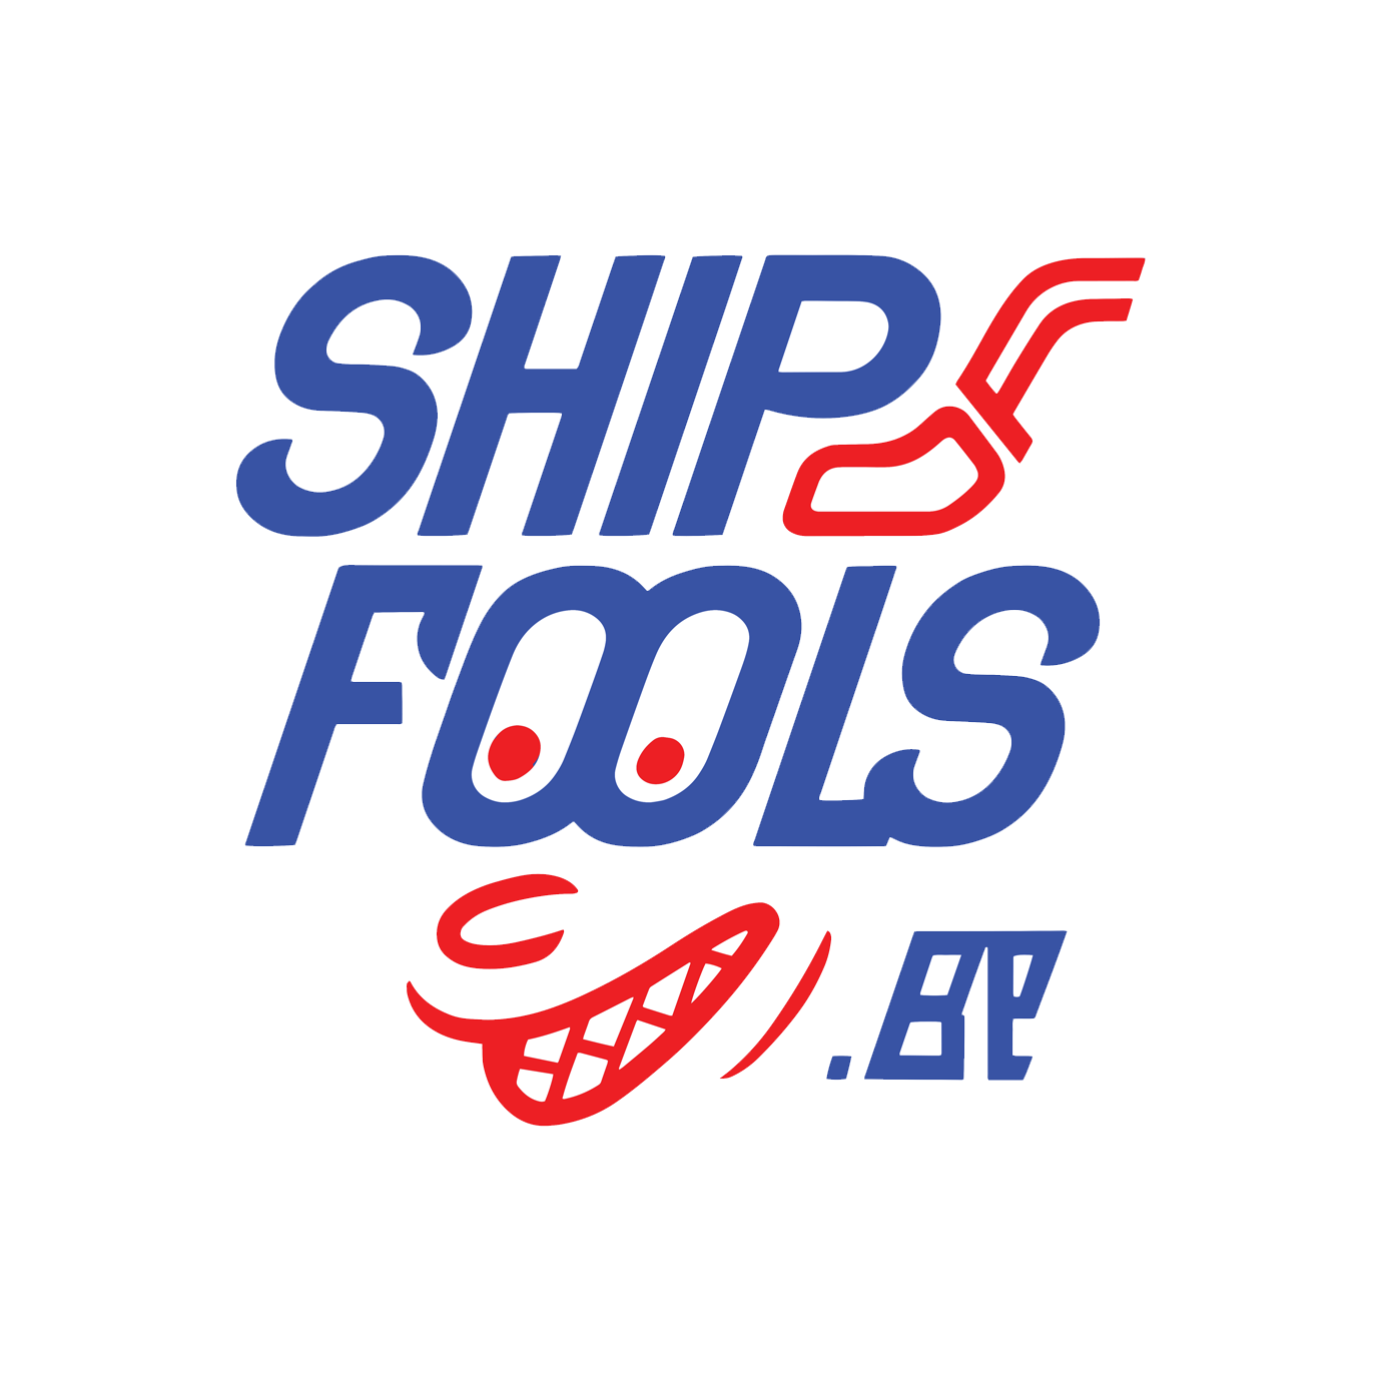 Ship of fools